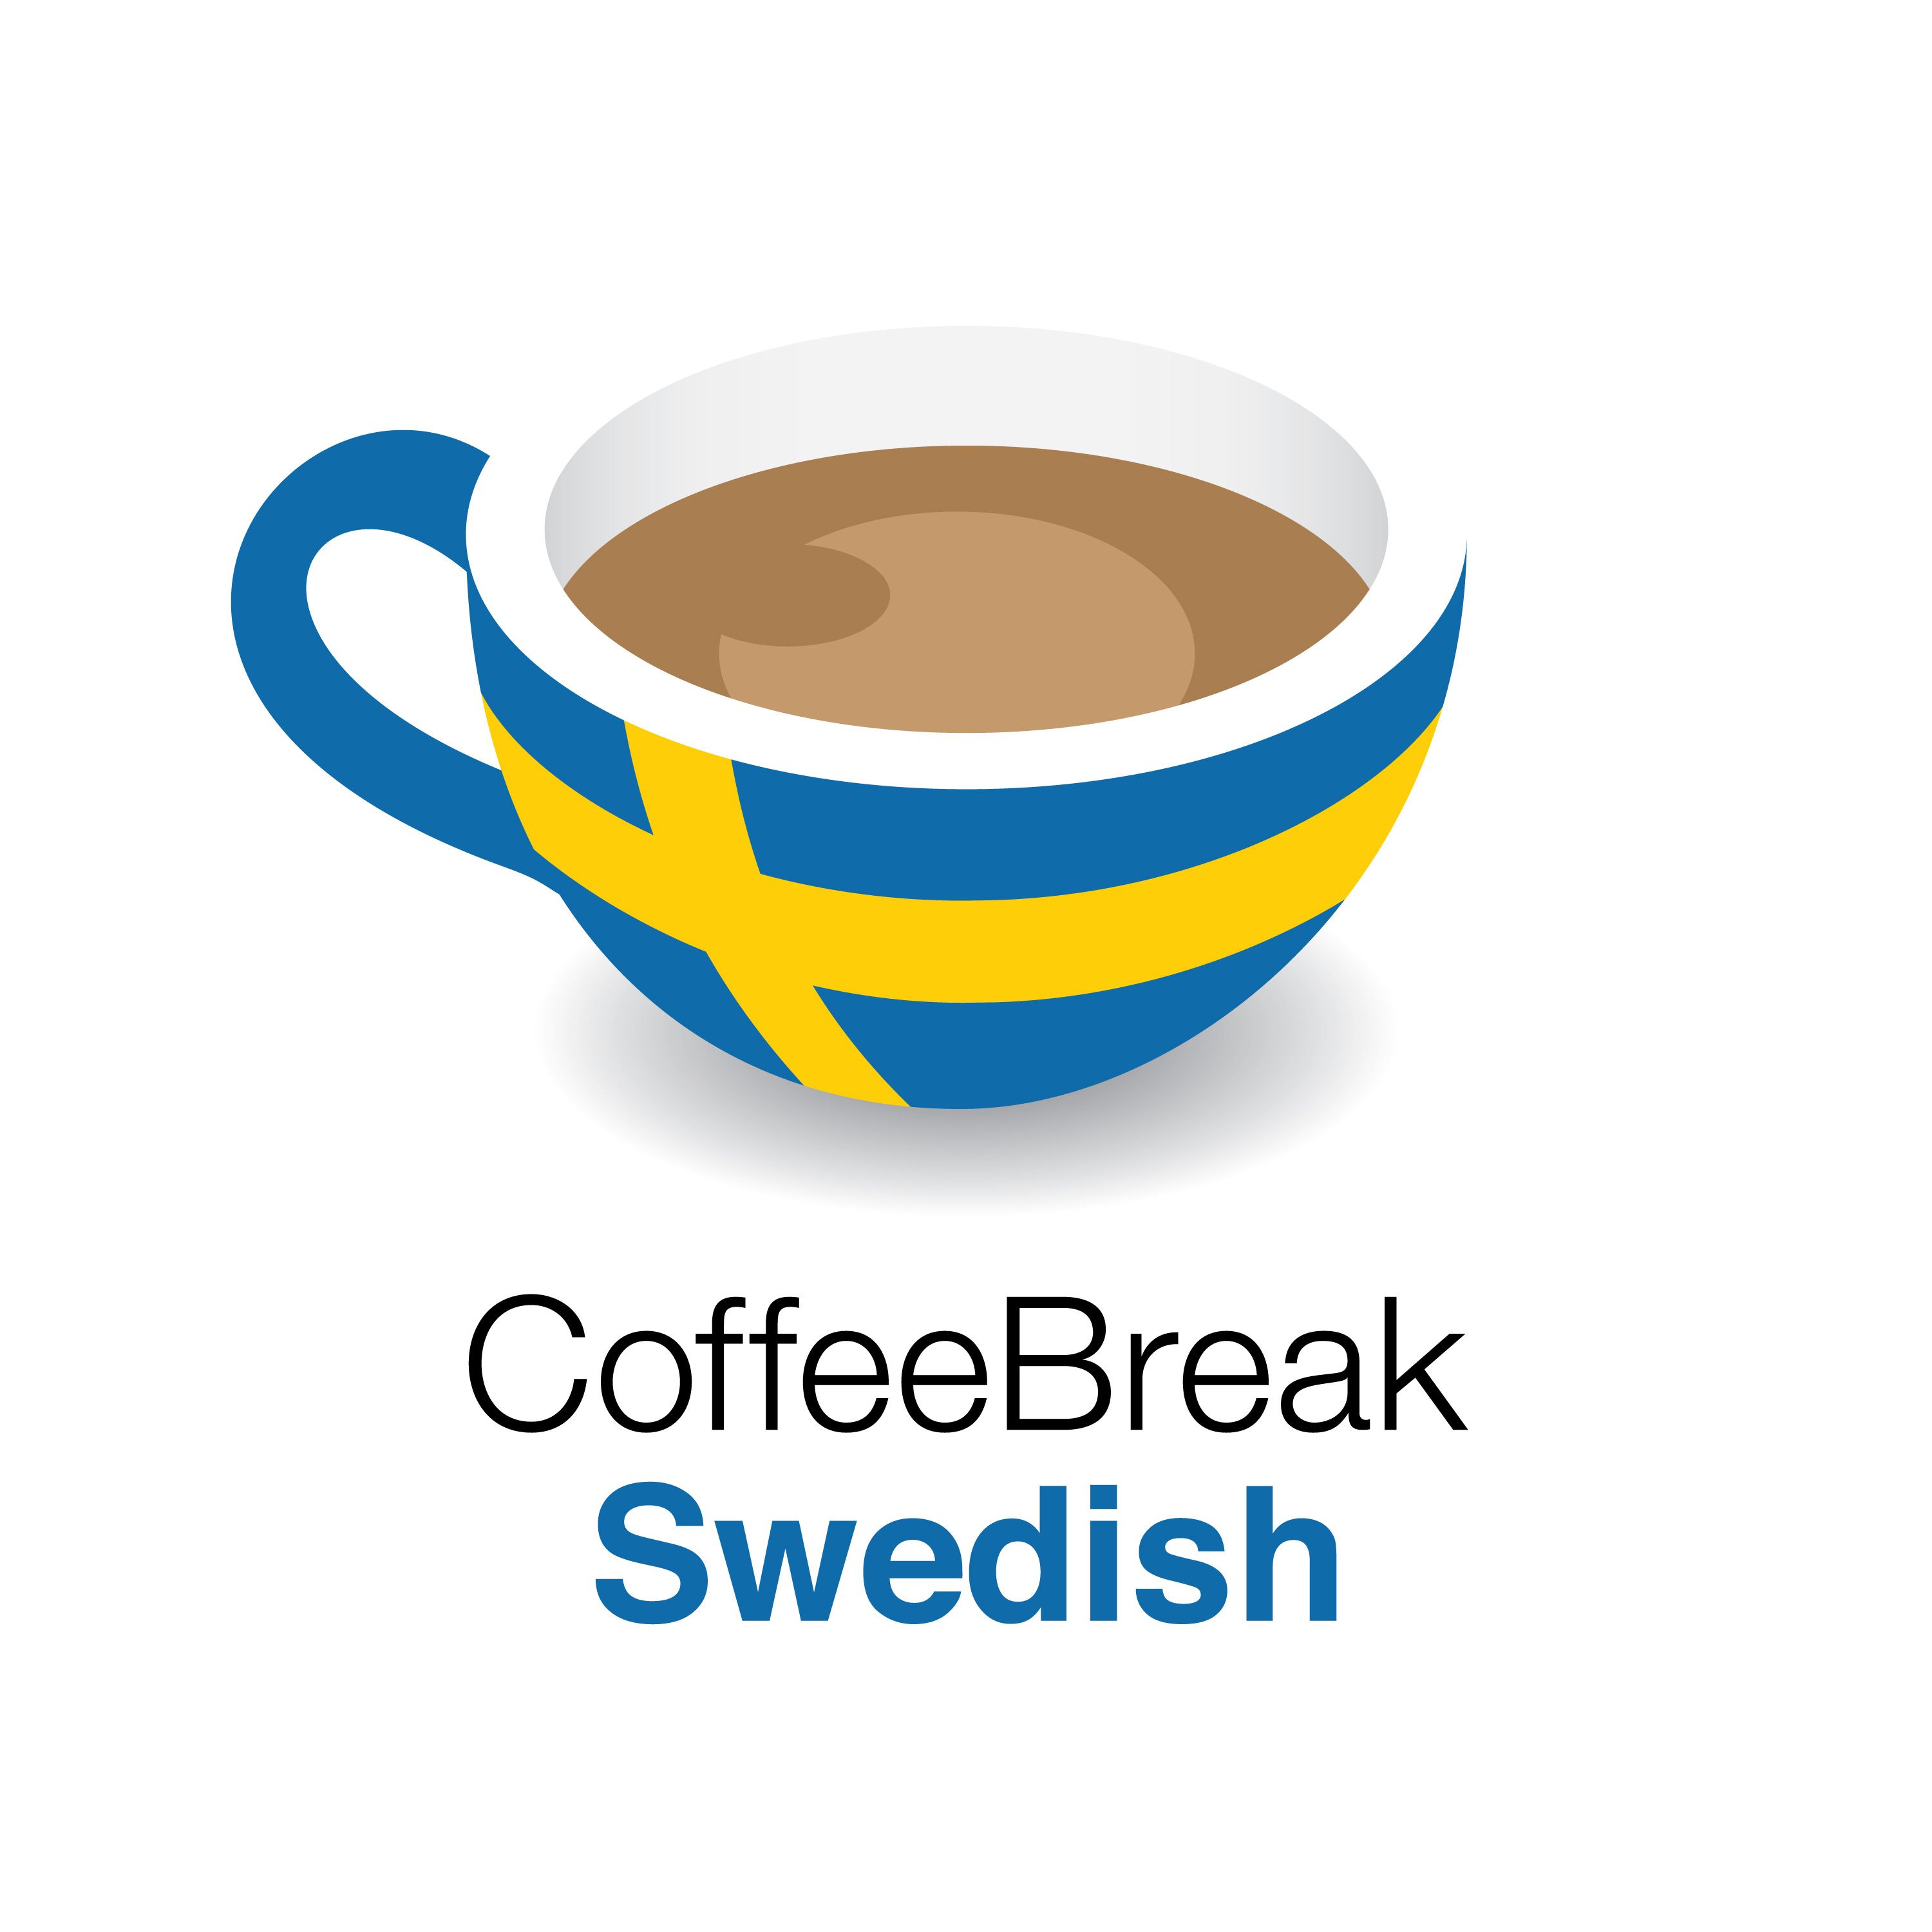 Introducing the Coffee Break Swedish Culture mini-series